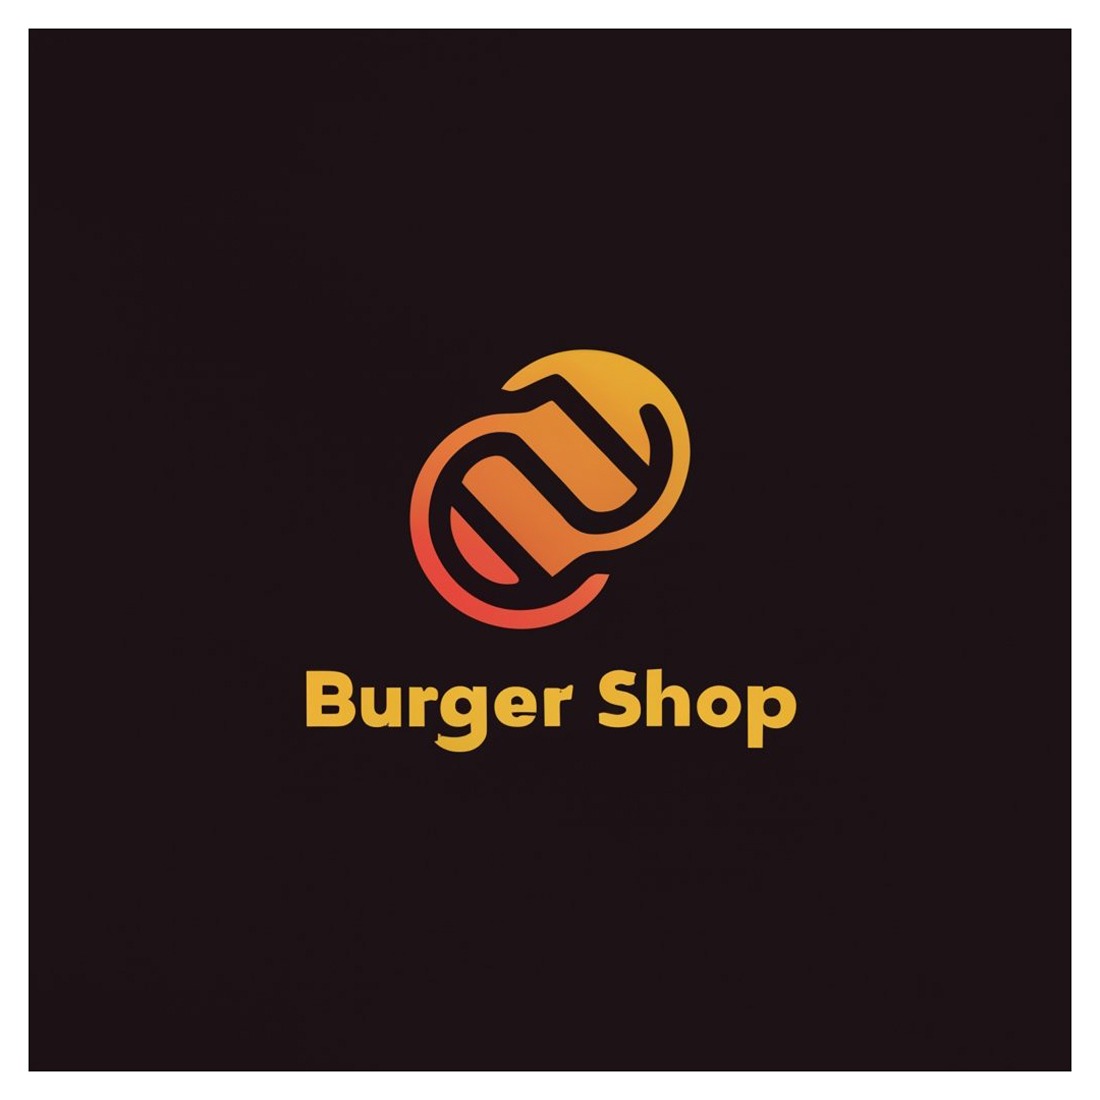 Burger Shop - Logo Design Template preview image.